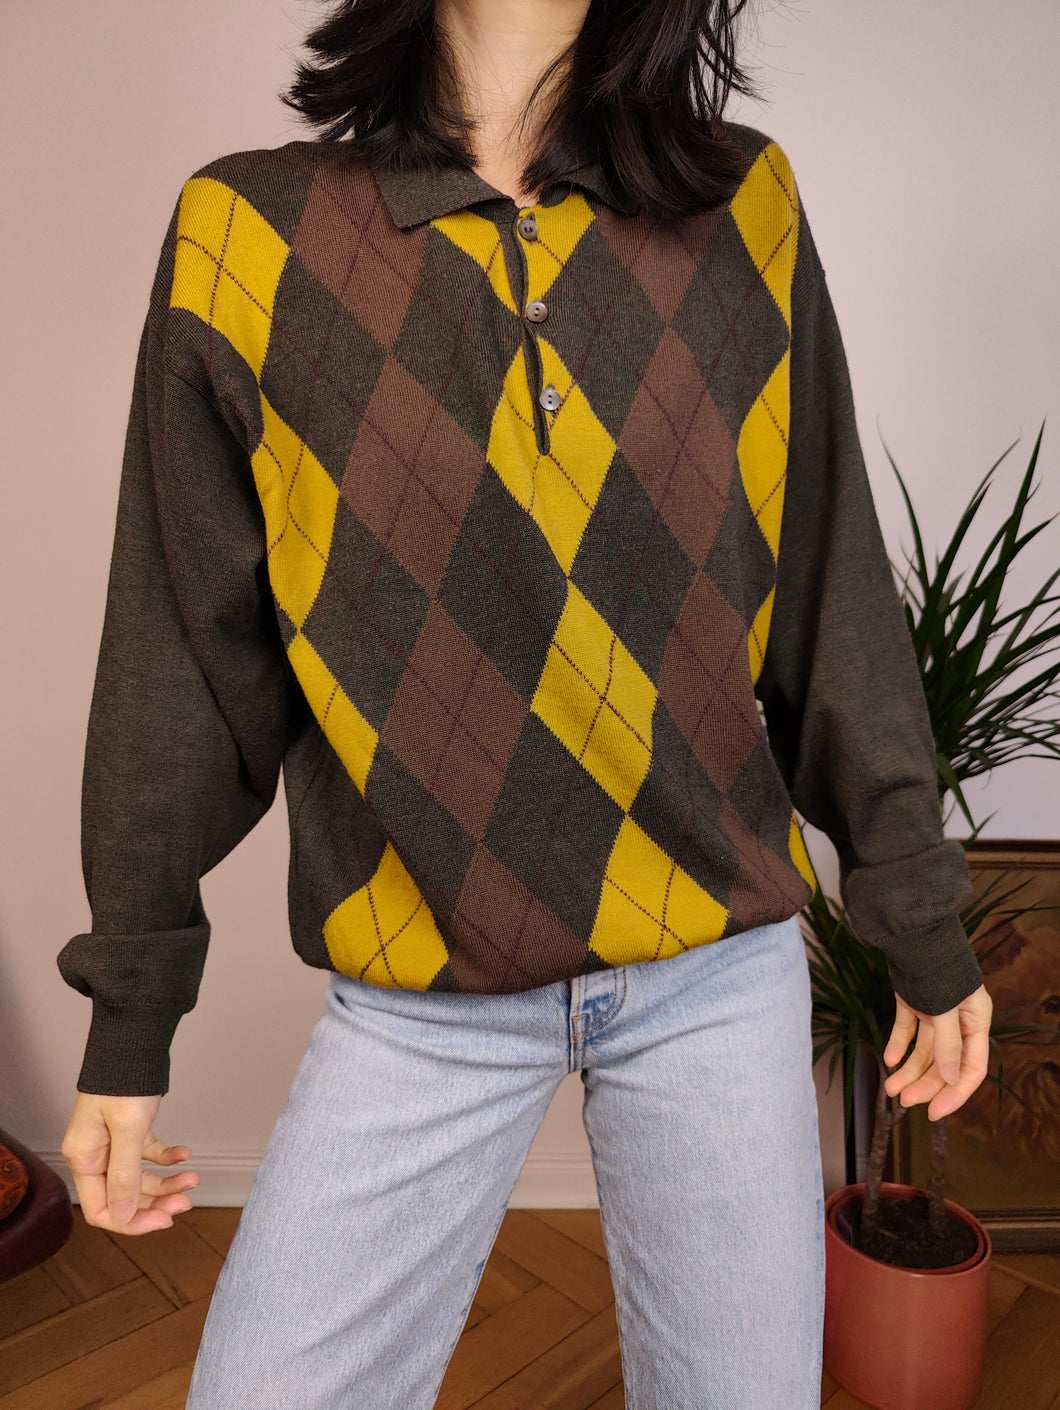 Vintage argyle merino wool polo collar sweater knit pullover jumper khaki green brown yellow diamonds M